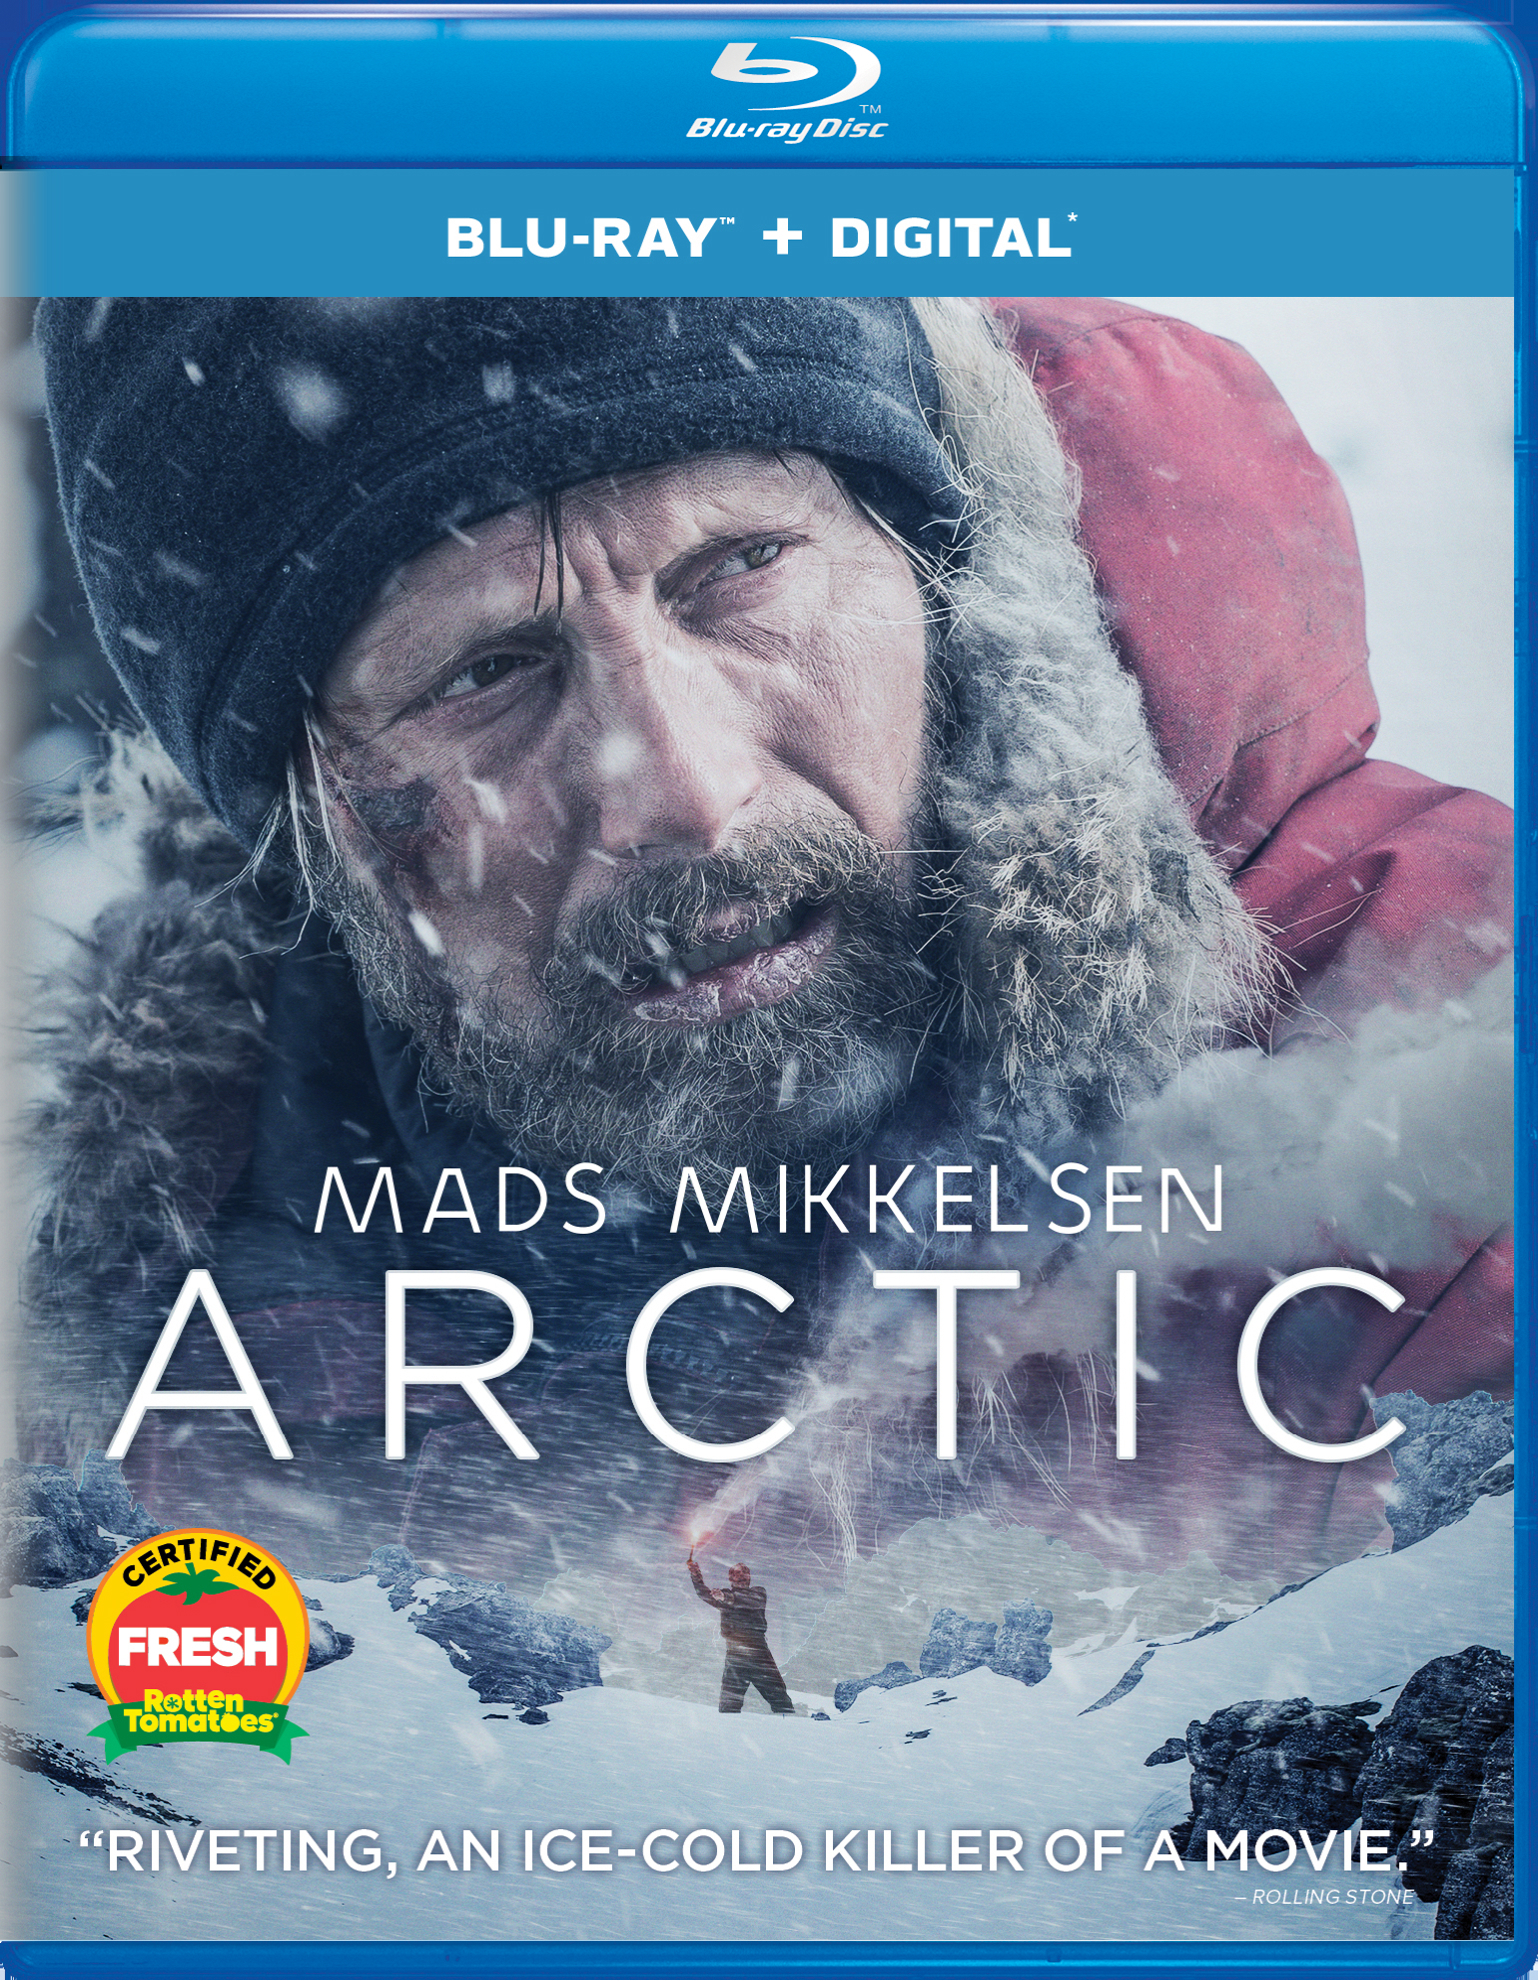 Arctic - Blu-ray [ 2019 ]  - Thriller Movies On Blu-ray - Movies On GRUV